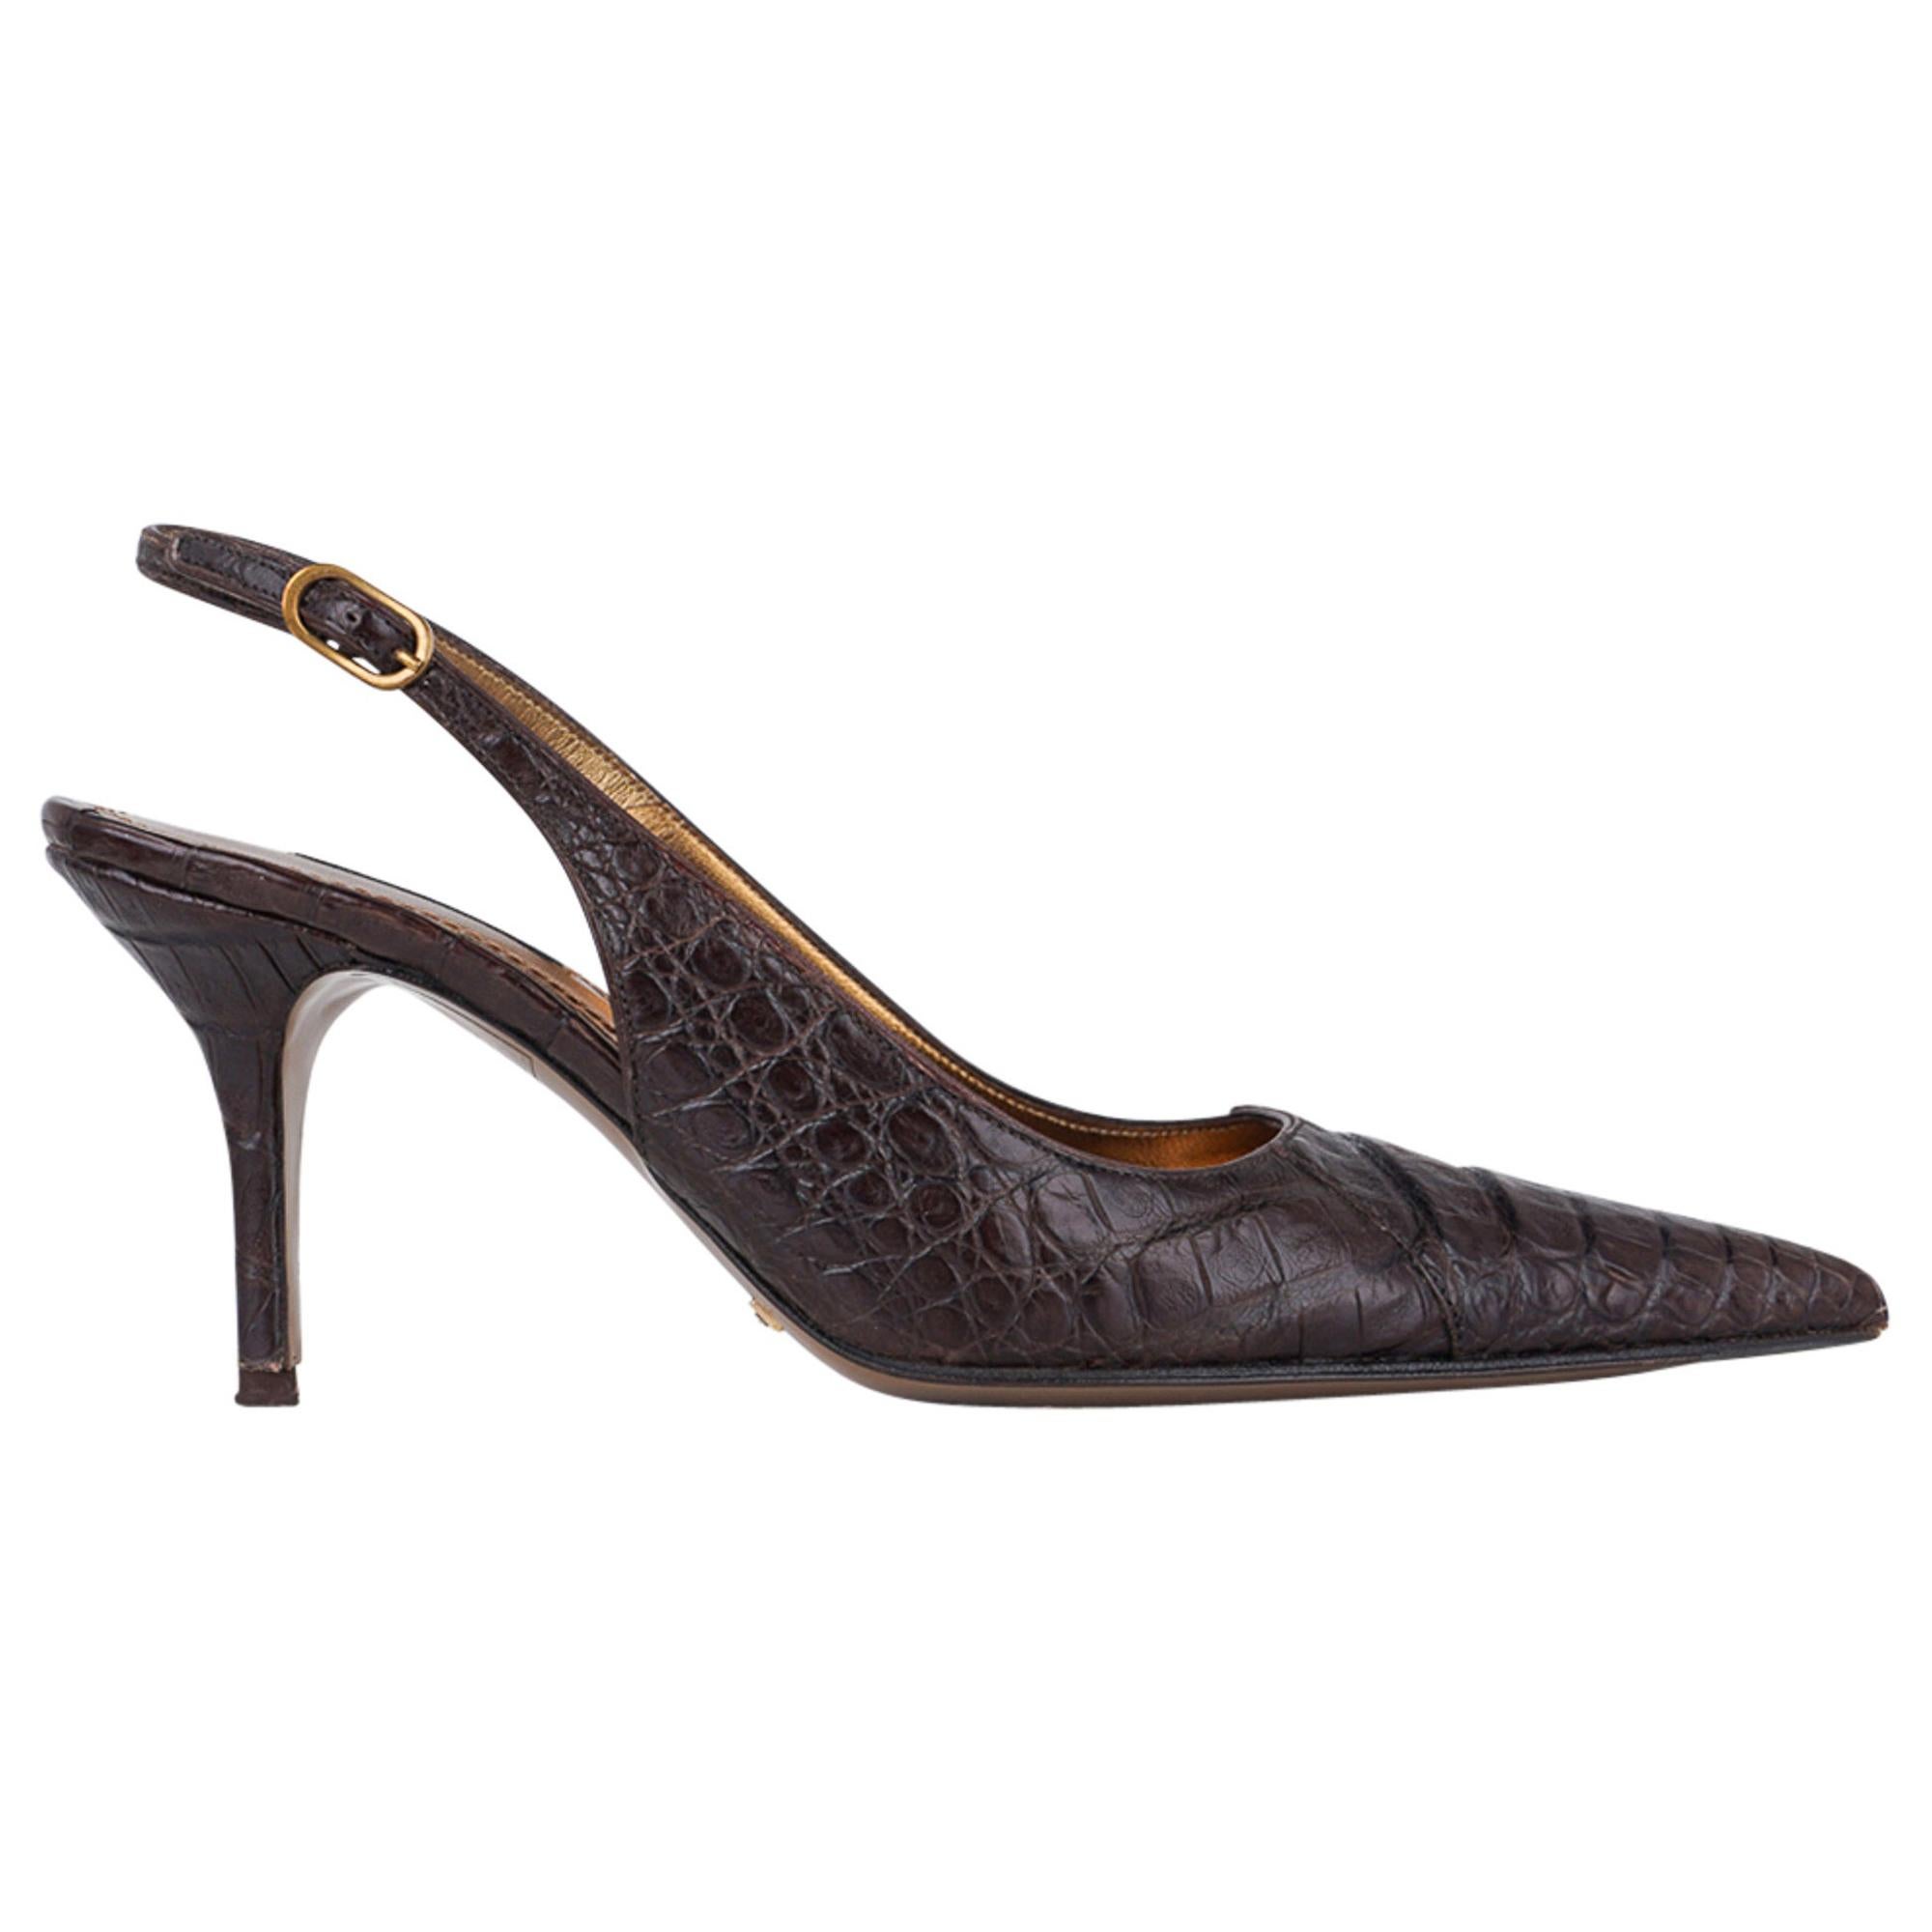 Chaussures Dolce&Gabbana Signature - Sandale Crocodile marron - 40 / 10 - 9